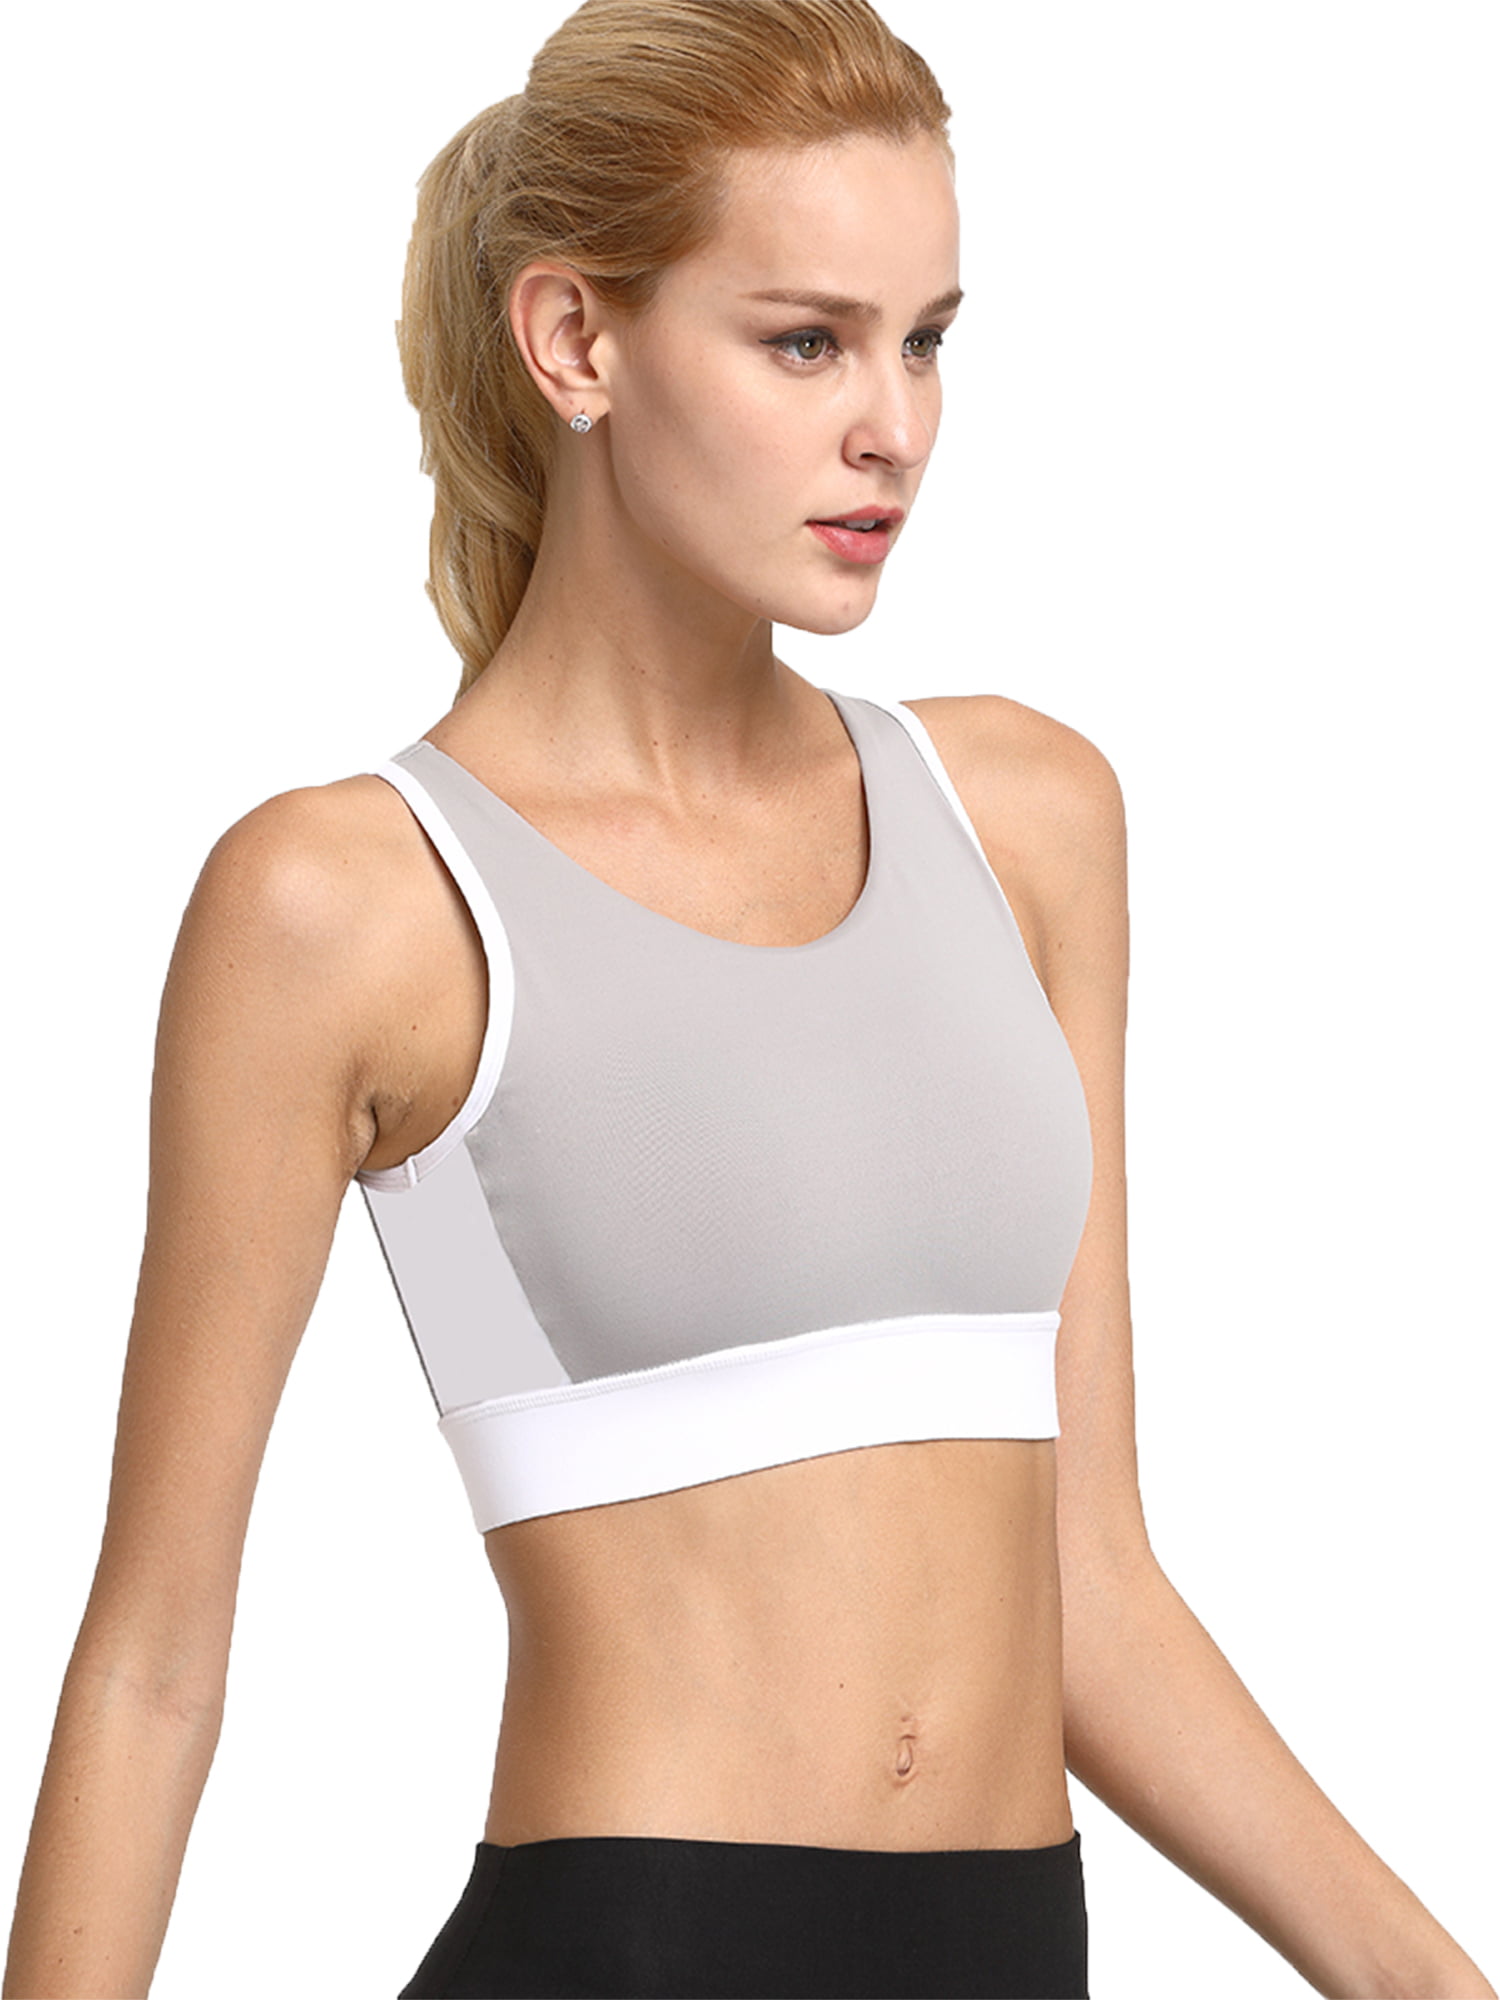 Details about   Yoga Women's Clothing Sports Bra Ladies Front Buckle Tank Top Clothing Vest JA 